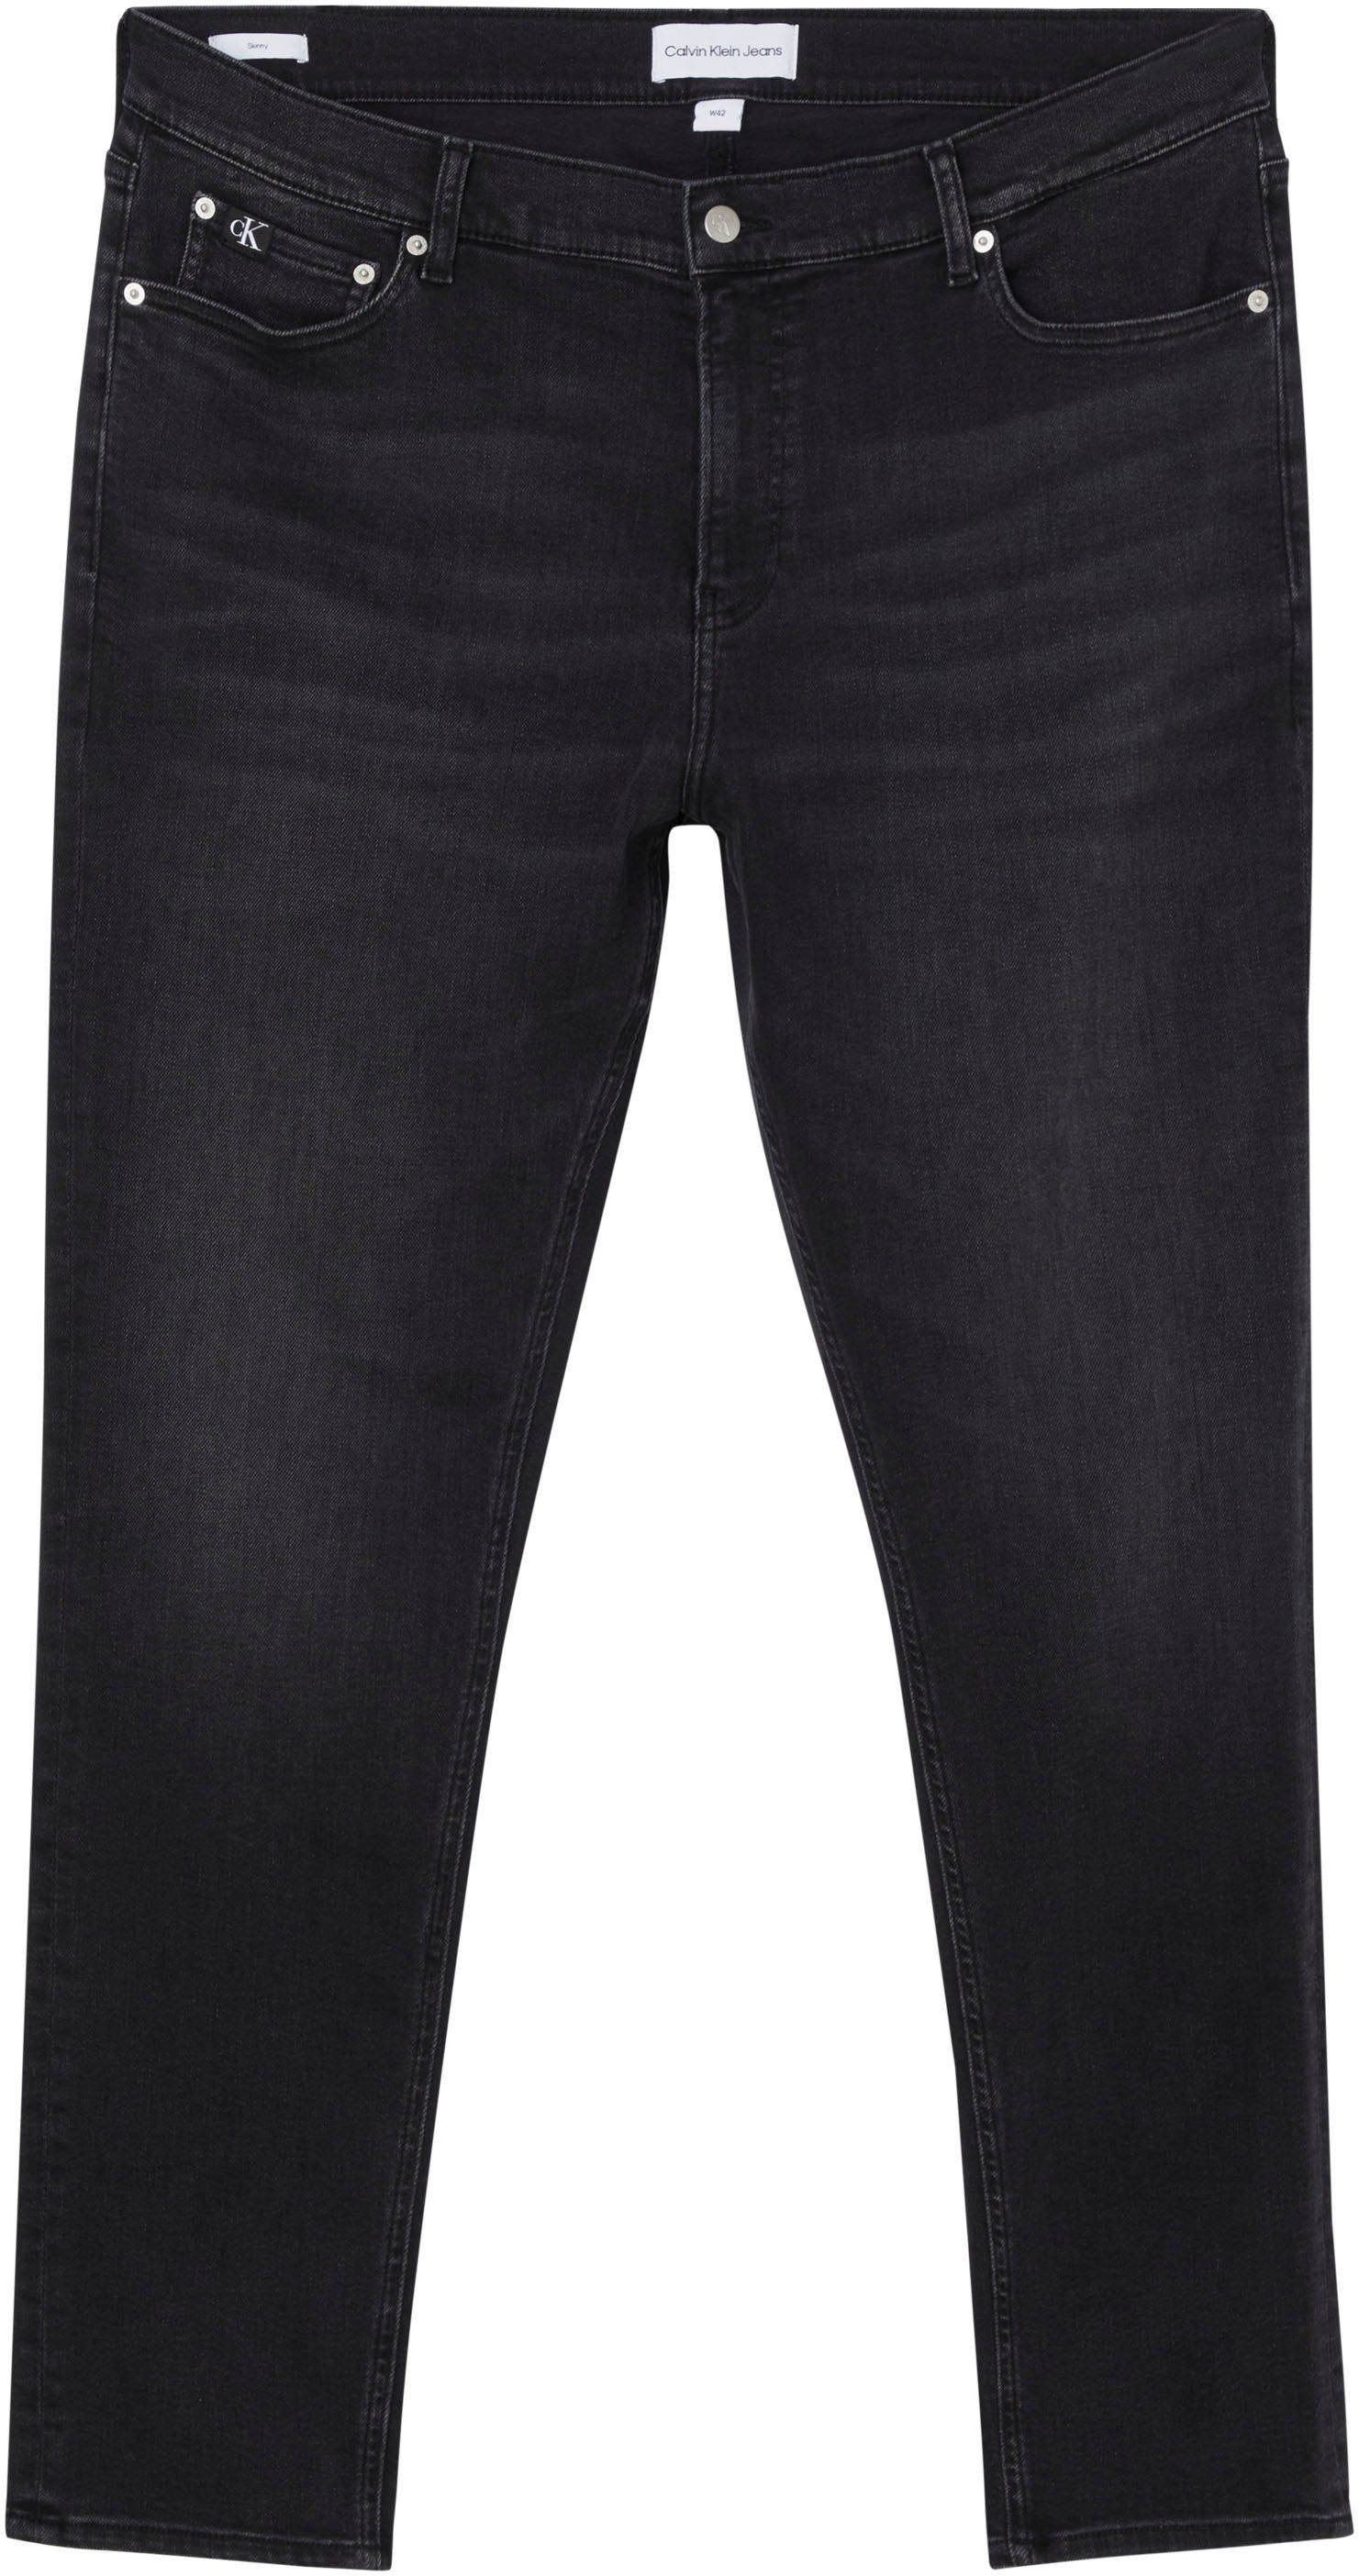 SKINNY PLUS angeboten Skinny-fit-Jeans Denim_Black30 Jeans Plus Klein Weiten Jeans in wird Calvin